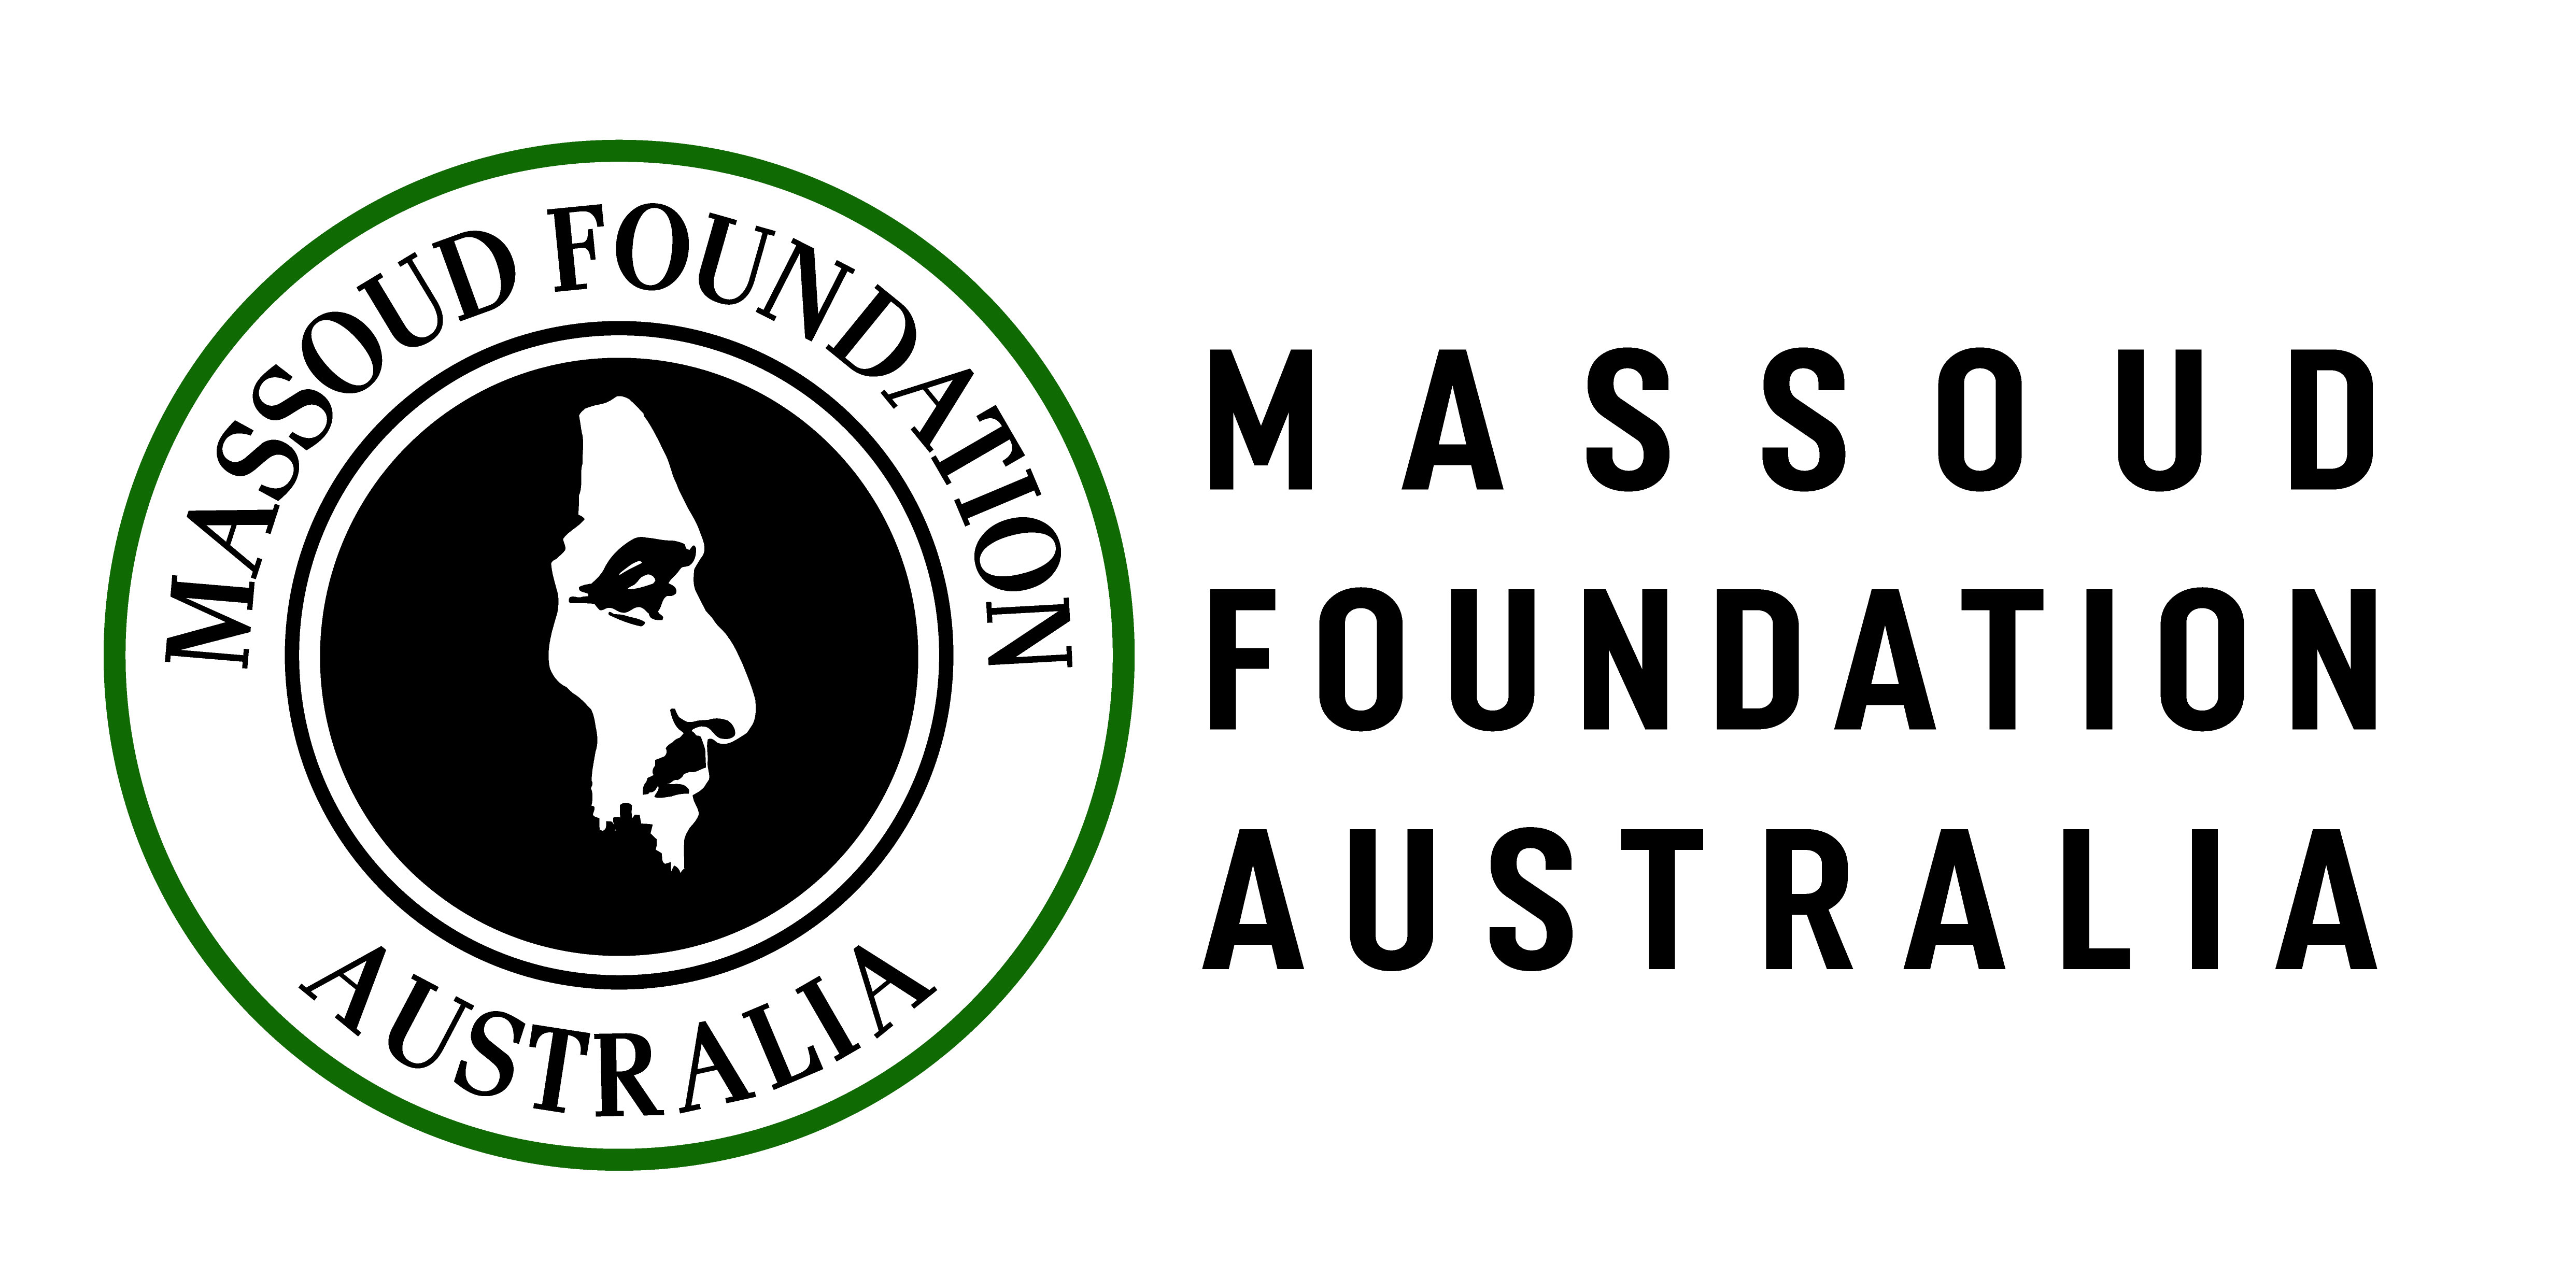 Massoud Foundation Australia logo